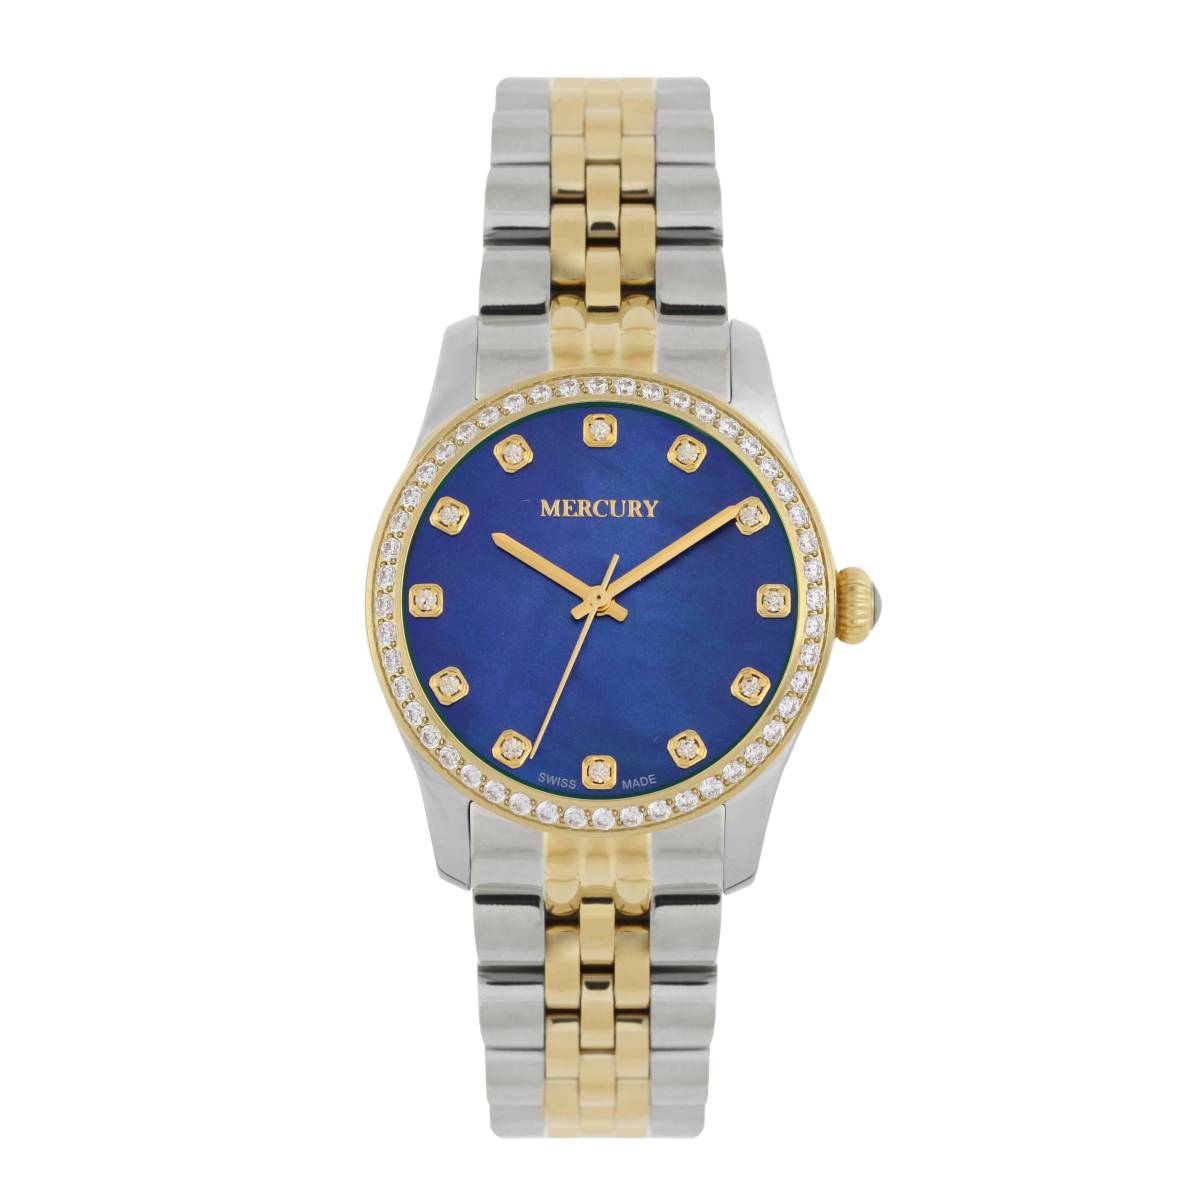 Mercury Women's Swiss Quartz Watch with Blue Dial - MER-0025